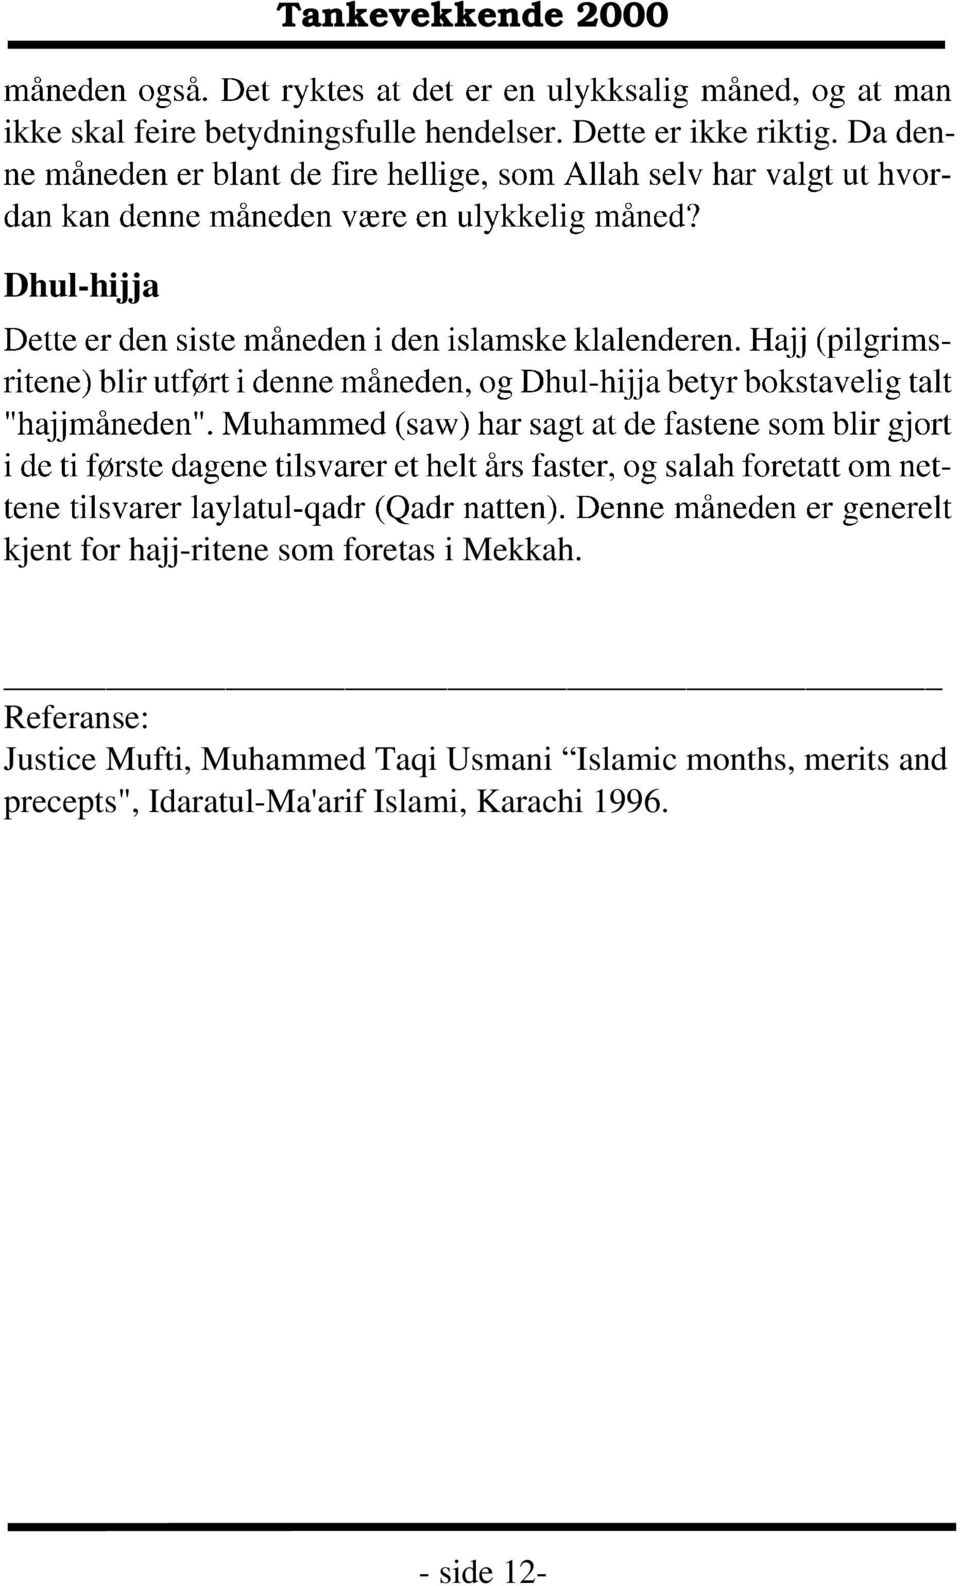 Referanse: Justice Mufti, Muhammed Taqi Usmani Islamic months,